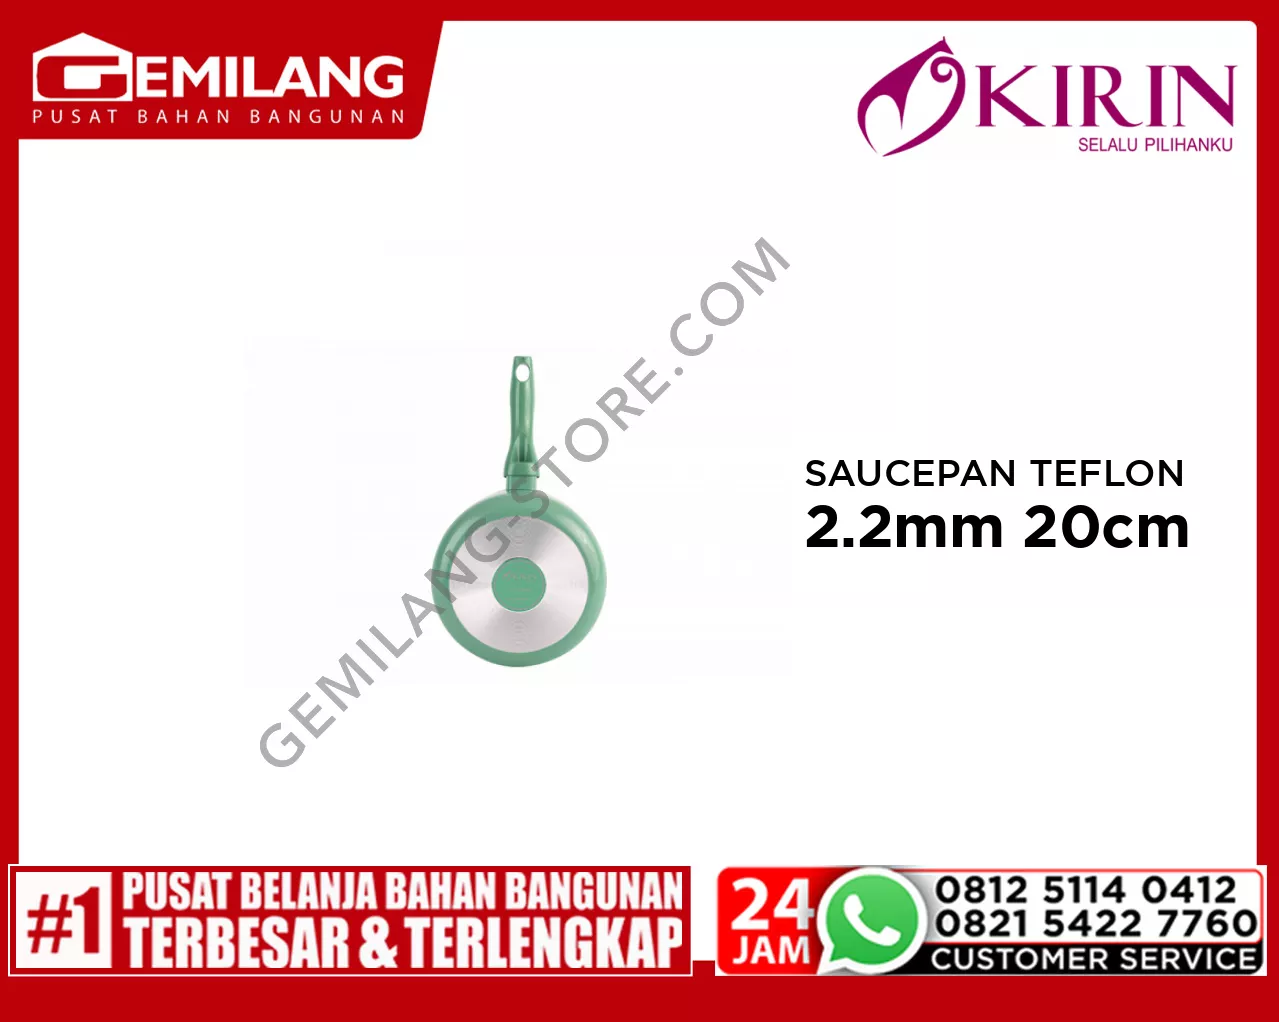 KIRIN TENUN SAUCEPAN TEFLON MARBLE GREEN 2.2mm 20cm